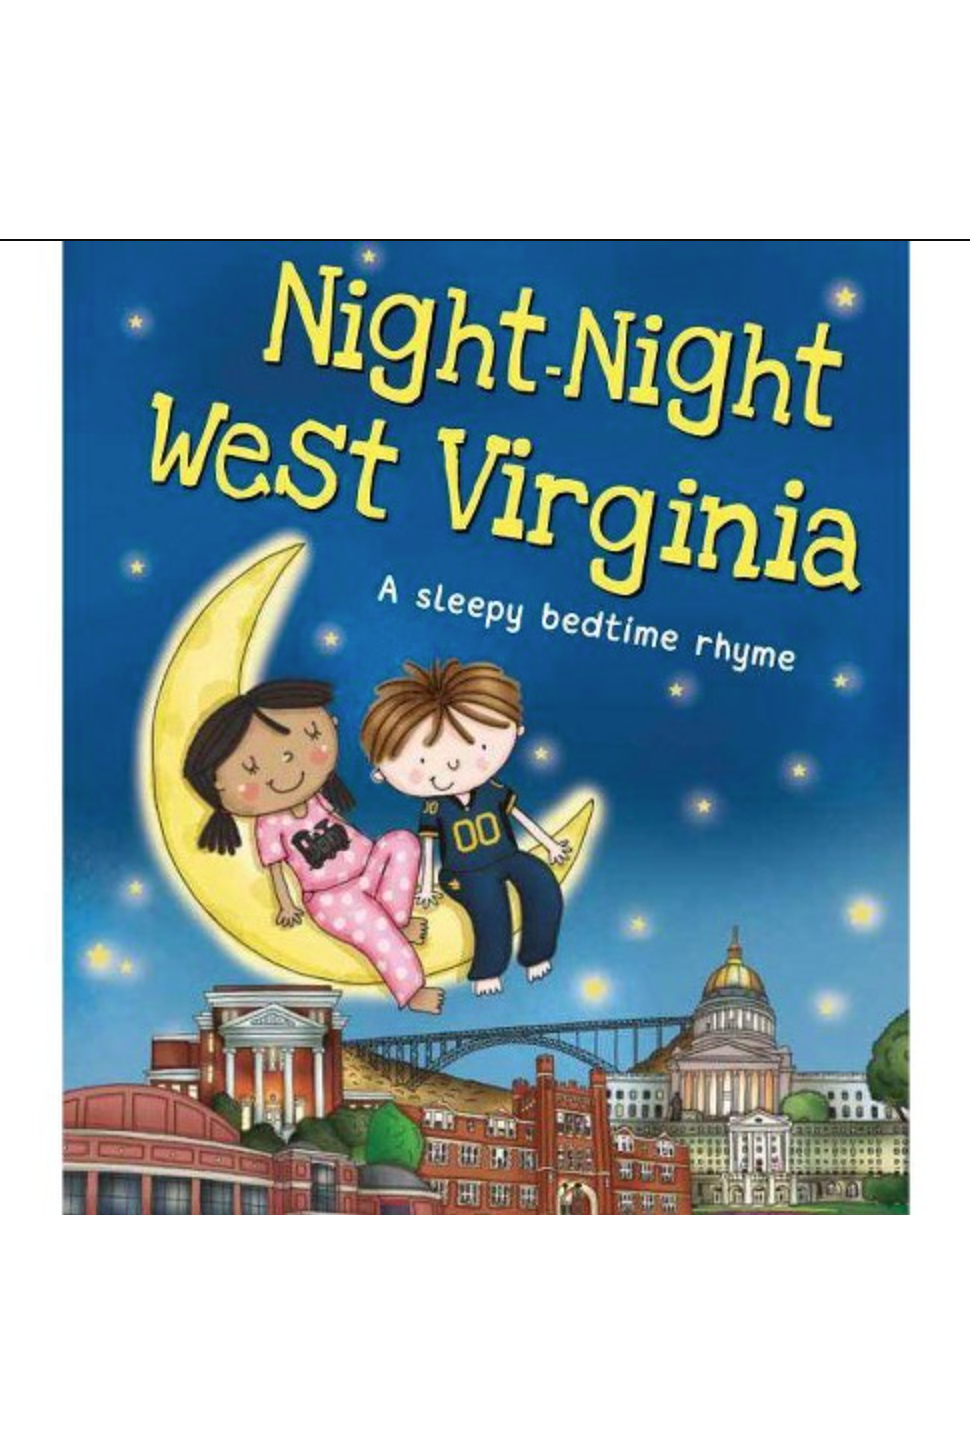 NIGHT NIGHT WEST VIRGINIA